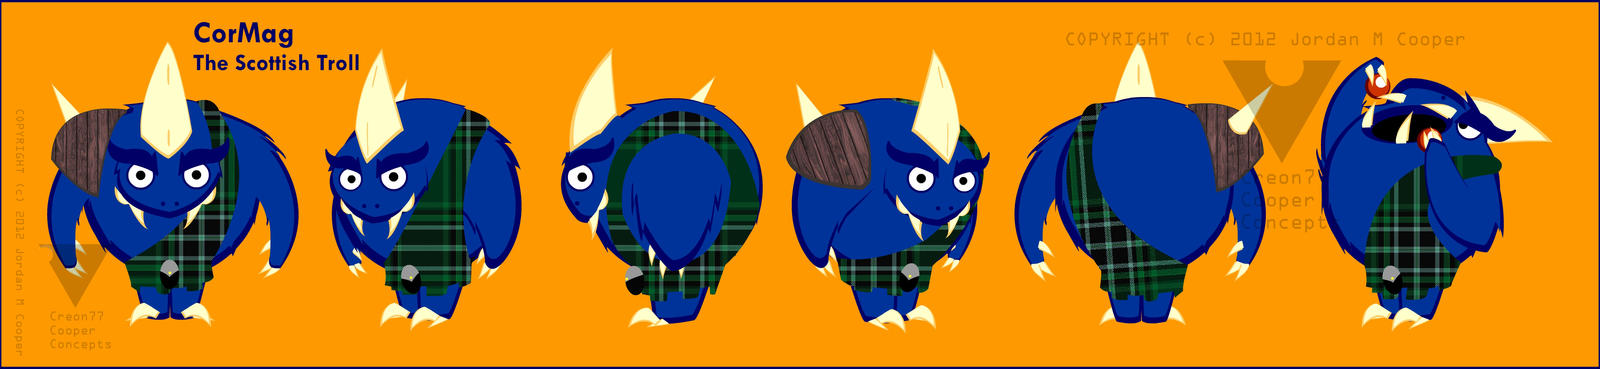 Cormag The Scottish Troll